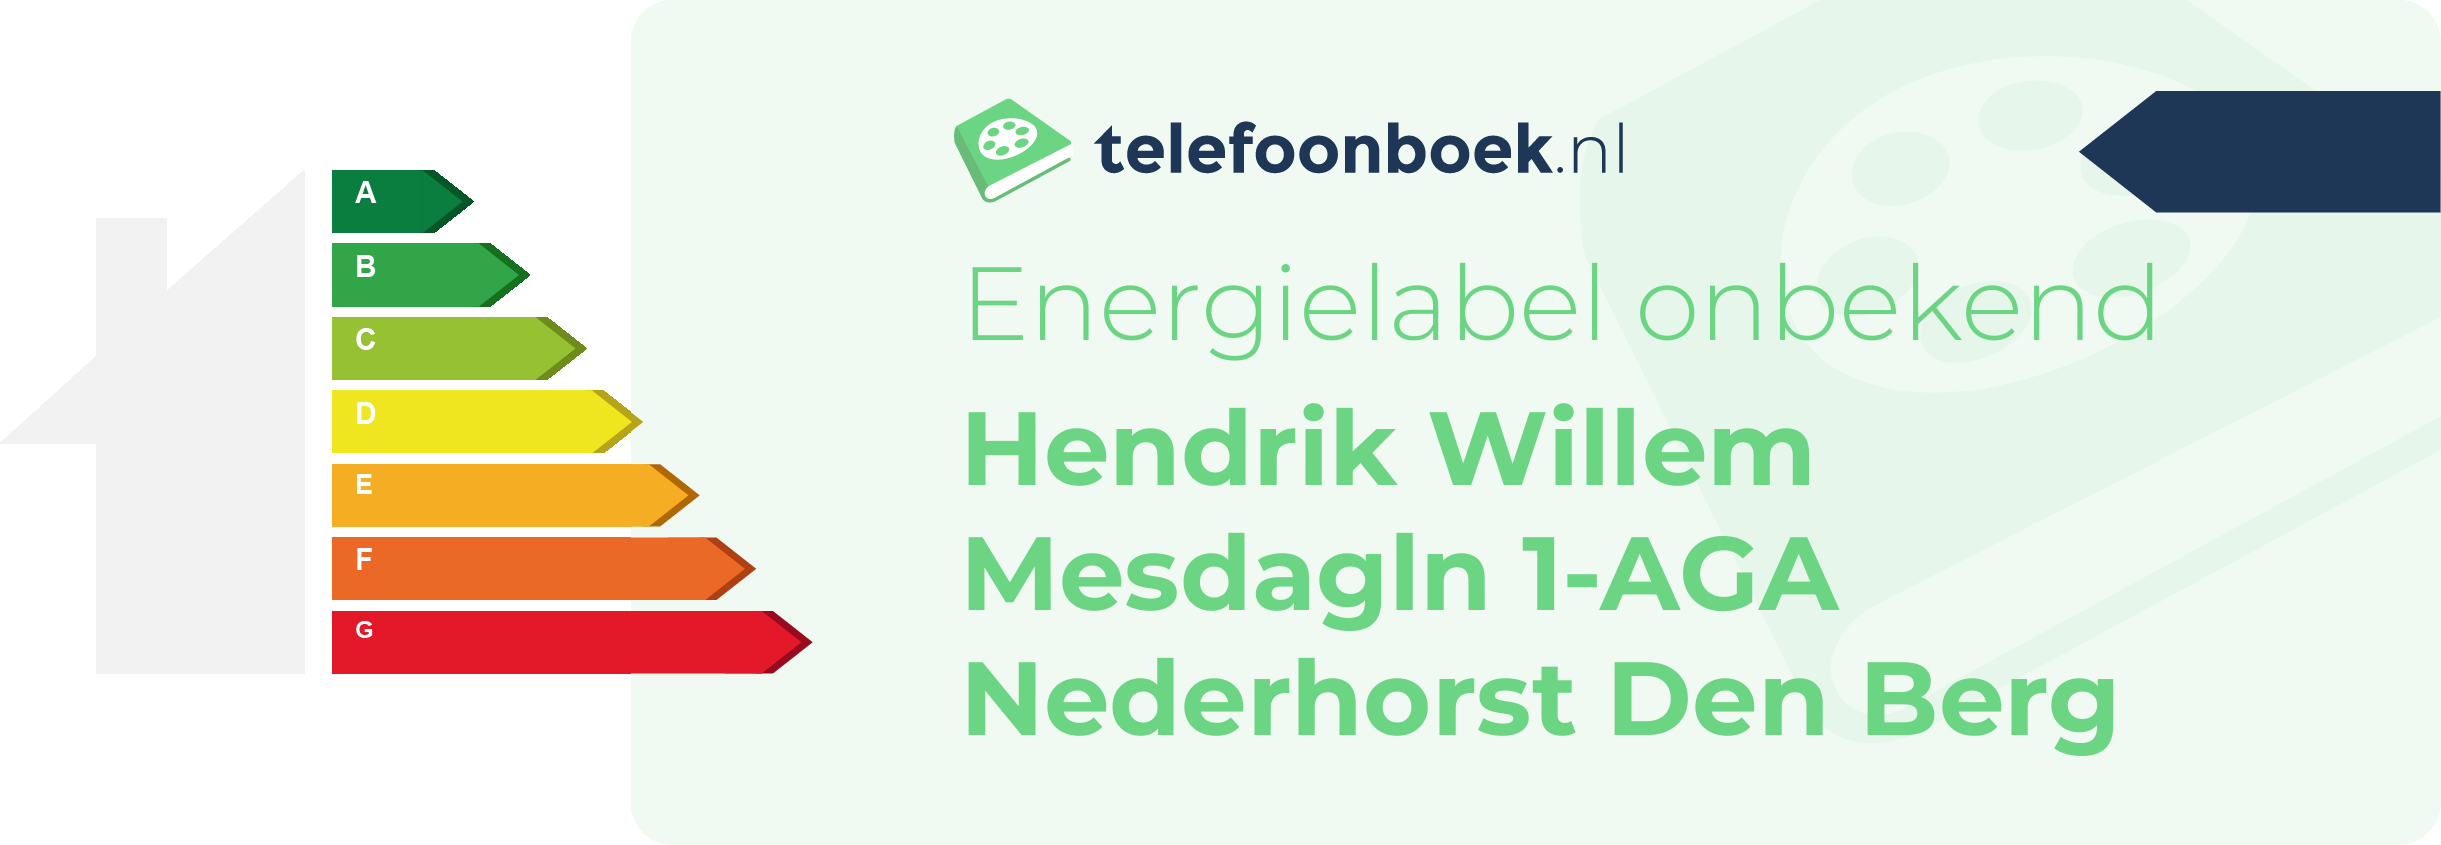 Energielabel Hendrik Willem Mesdagln 1-AGA Nederhorst Den Berg